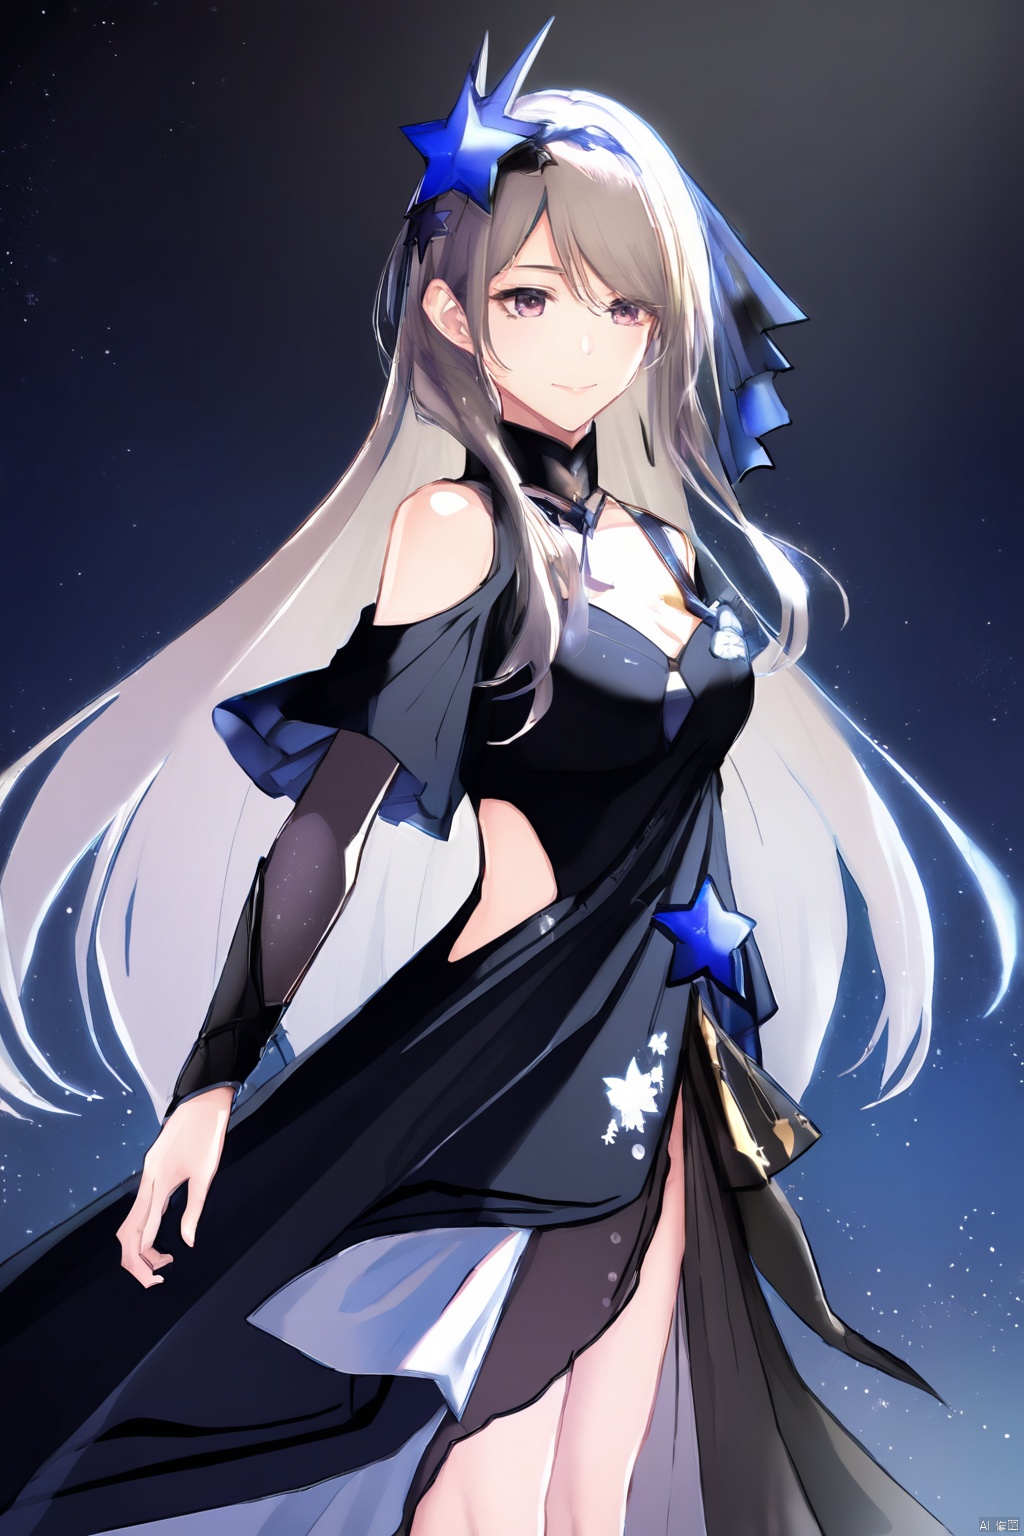 Silver Wavy Long Hair, Blue and Black Dress, star ornament